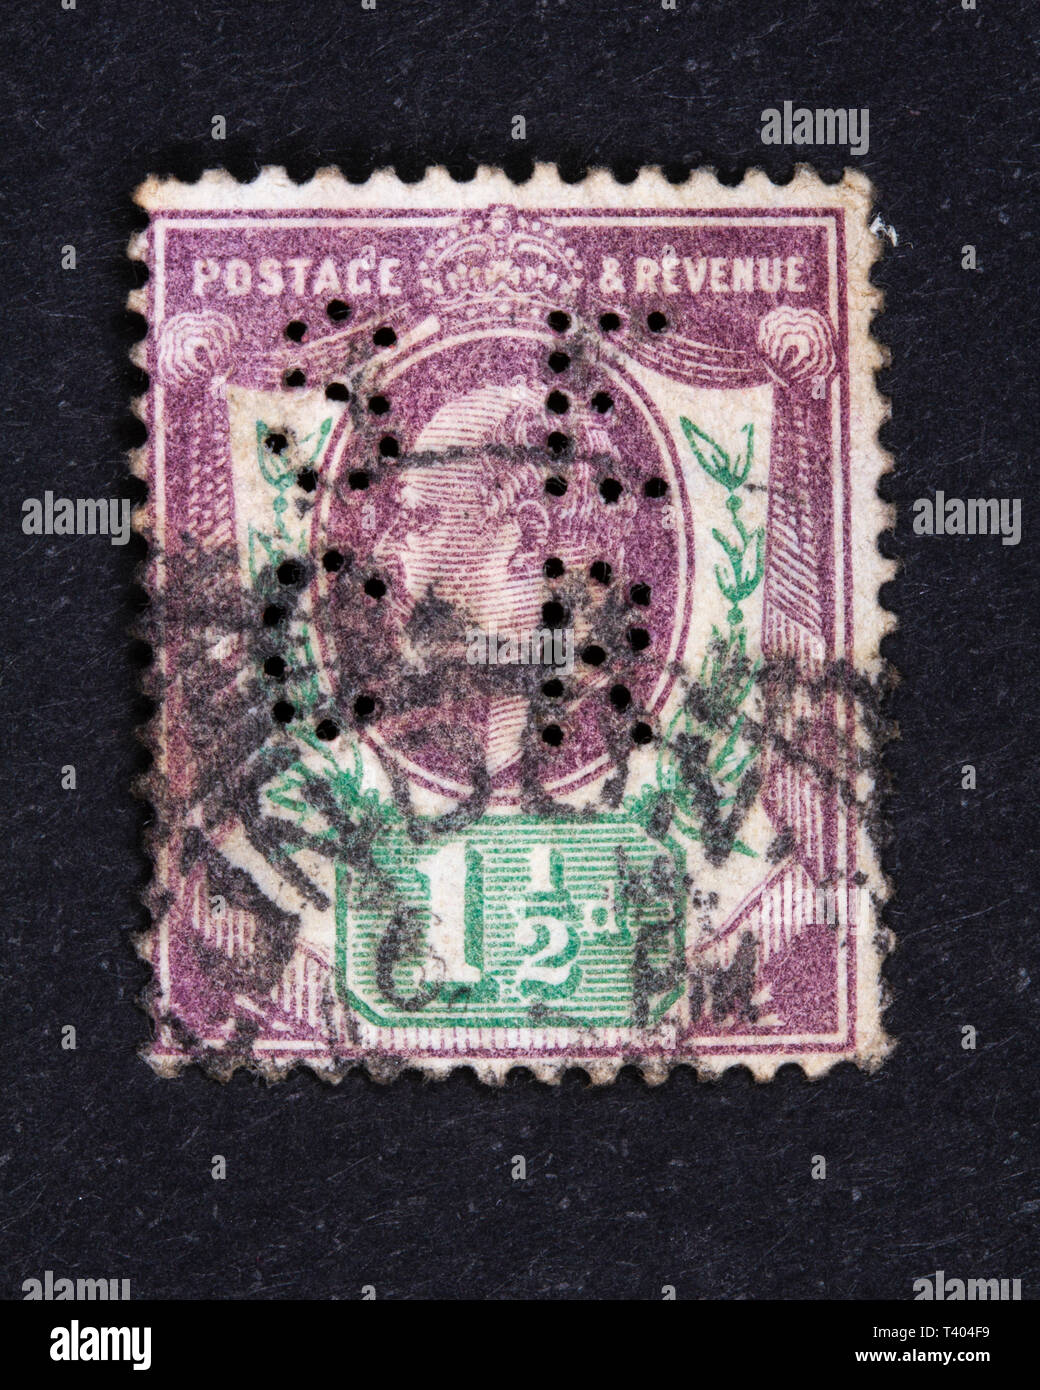 King Edward VII Postage Stamp Foto de stock